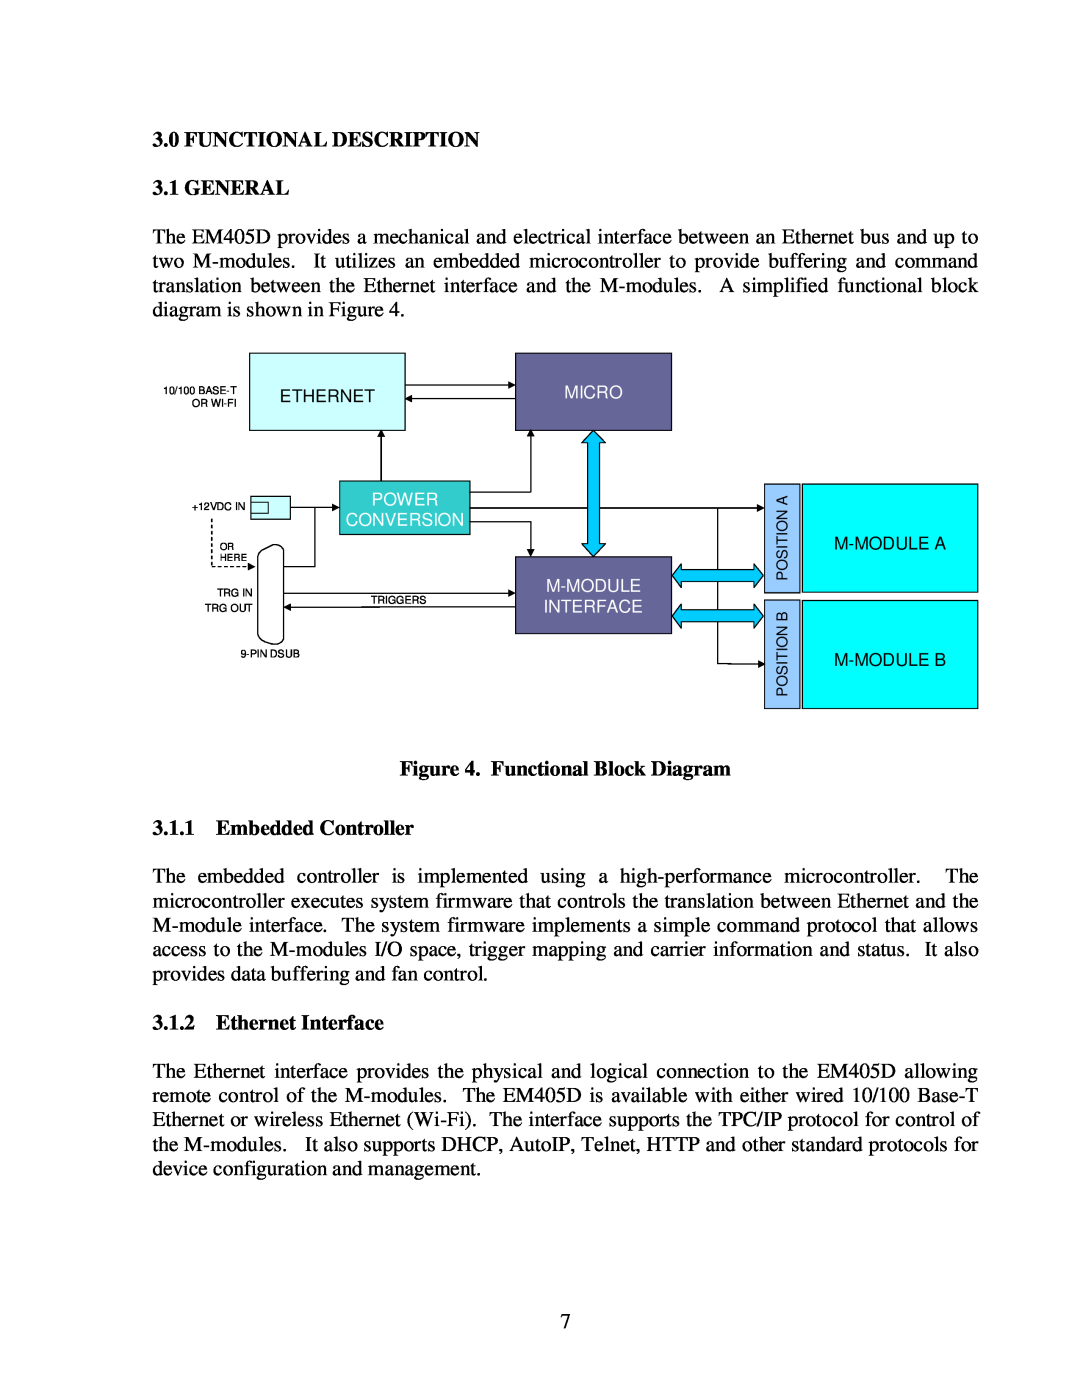 CH Tech EM405D FUNCTIONAL DESCRIPTION 3.1 GENERAL, Functional Block Diagram 3.1.1 Embedded Controller, Ethernet Interface 